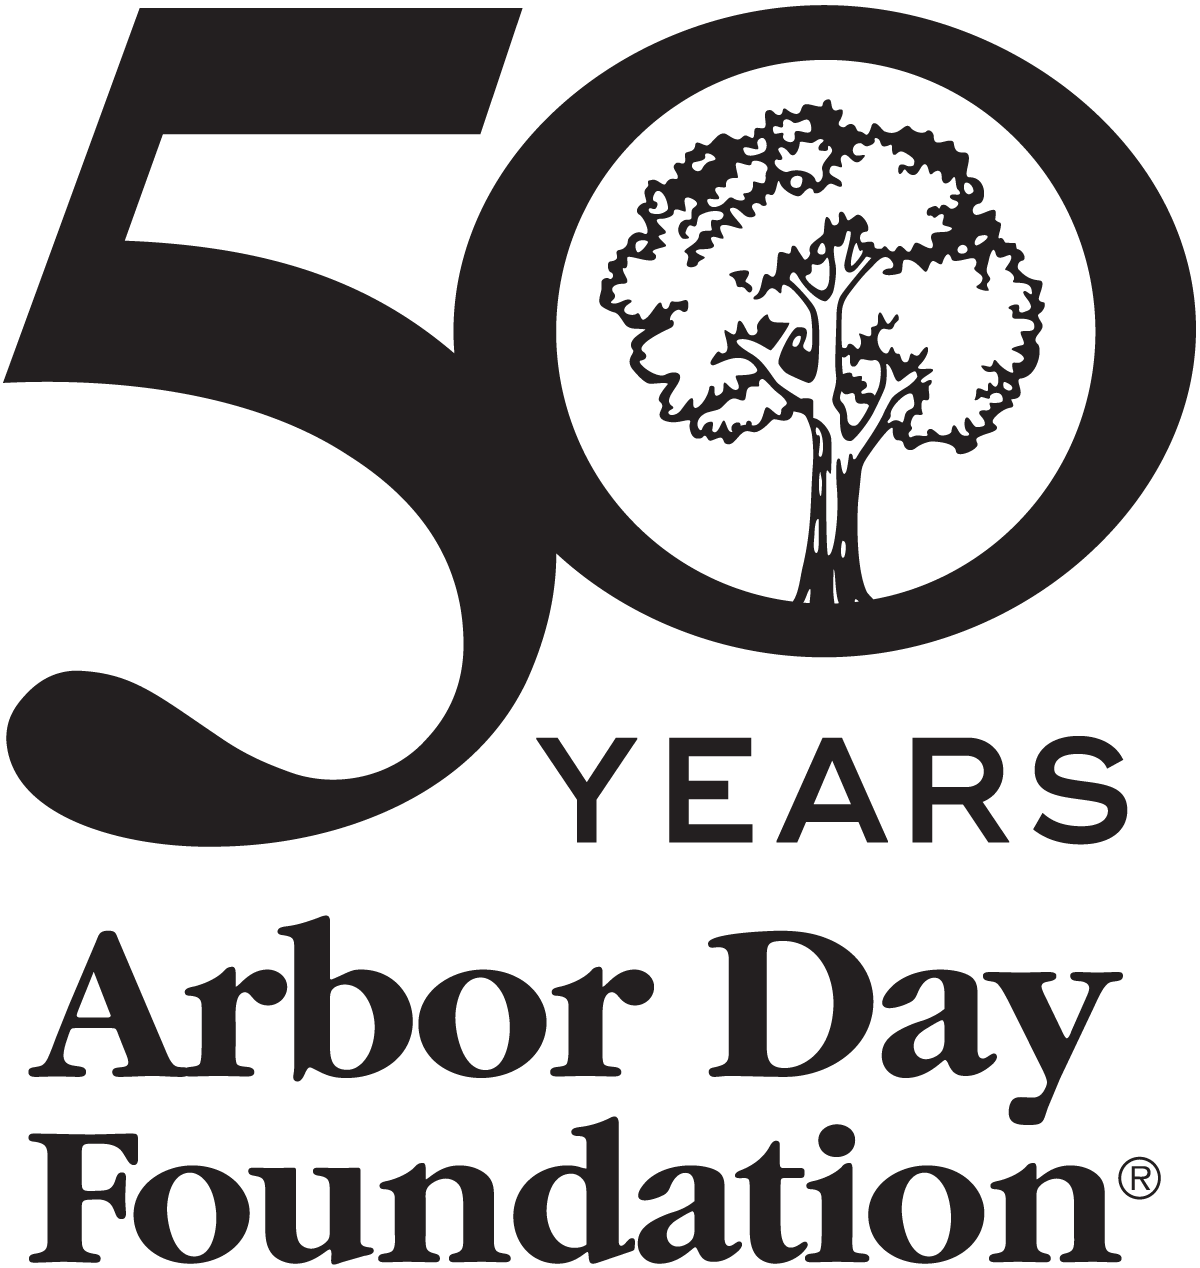 Arbor Day Foundation 50 years logo